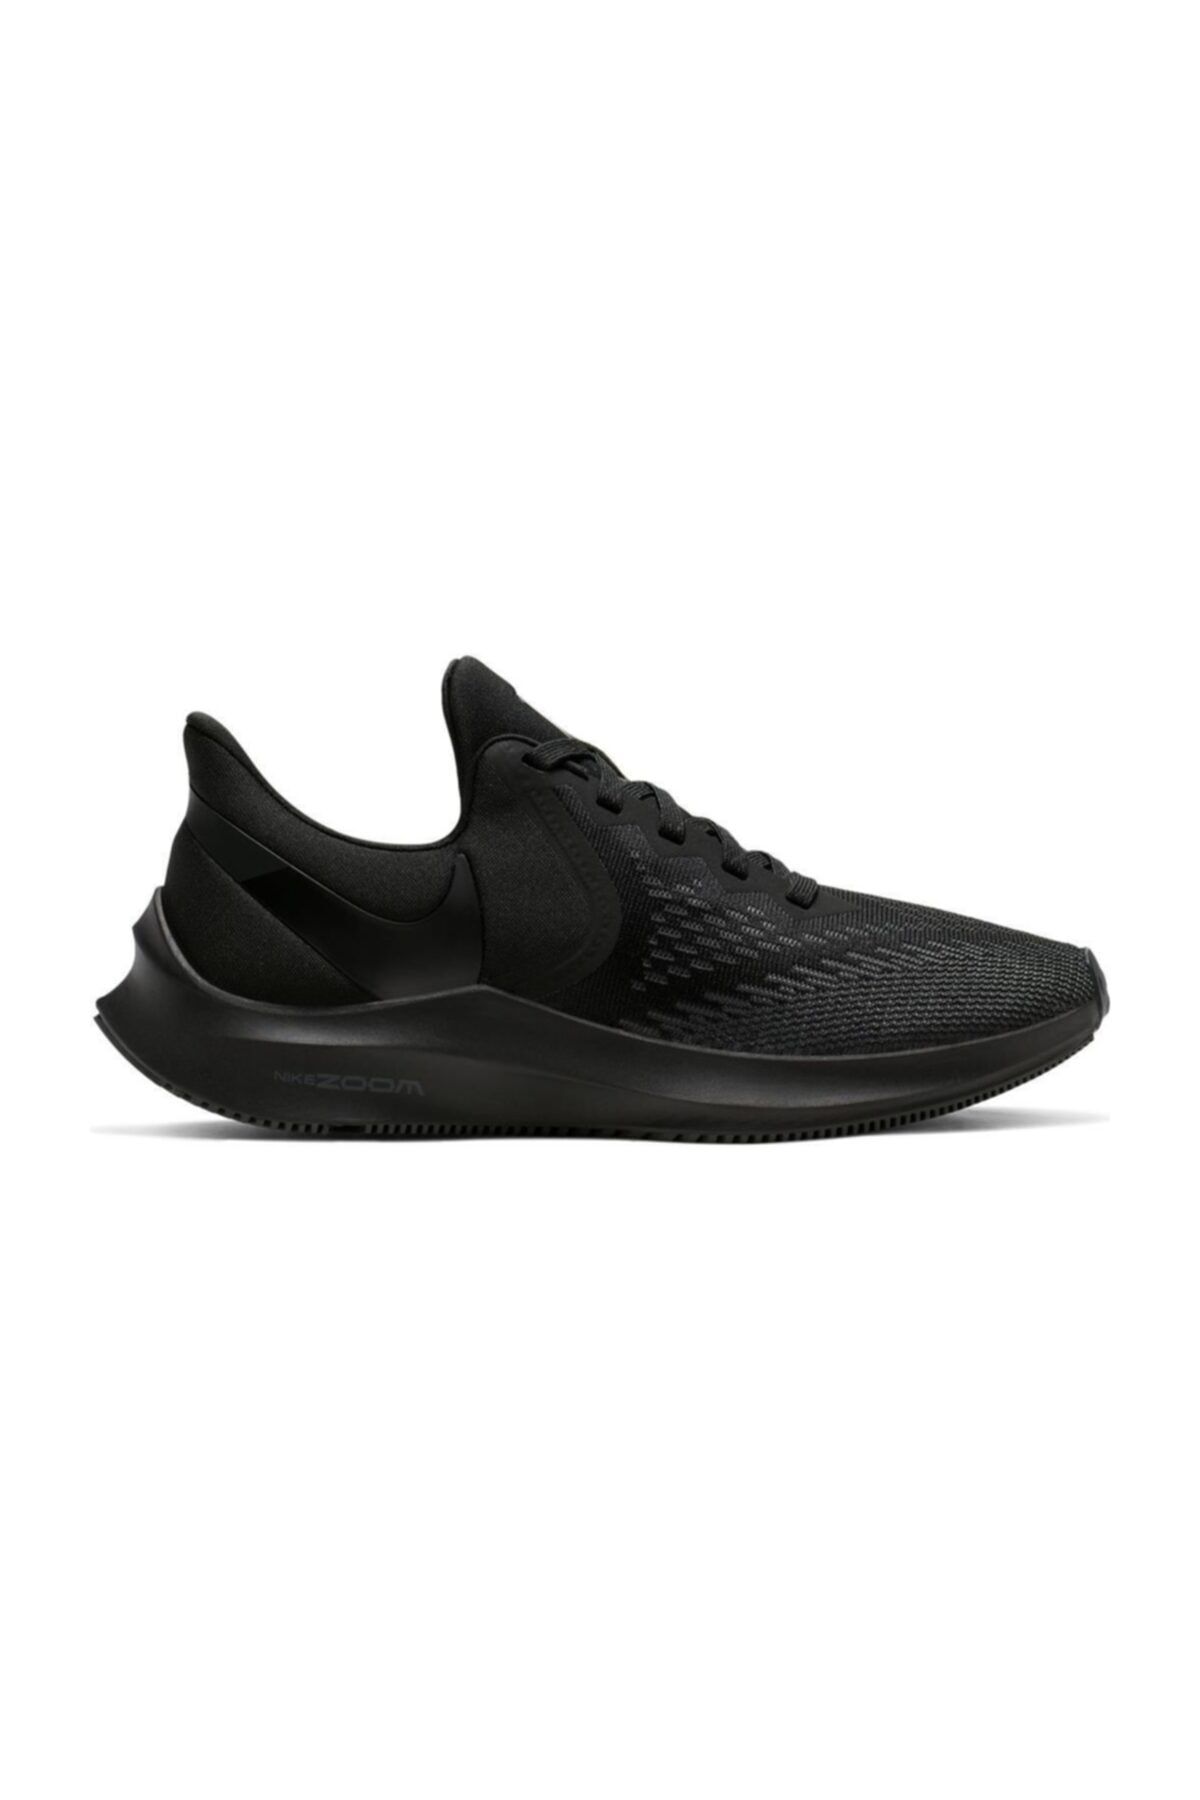 Nike Zoom Wınflo 6 Aq8228-004 Kadın Spor Ayakkabı Siyah-38